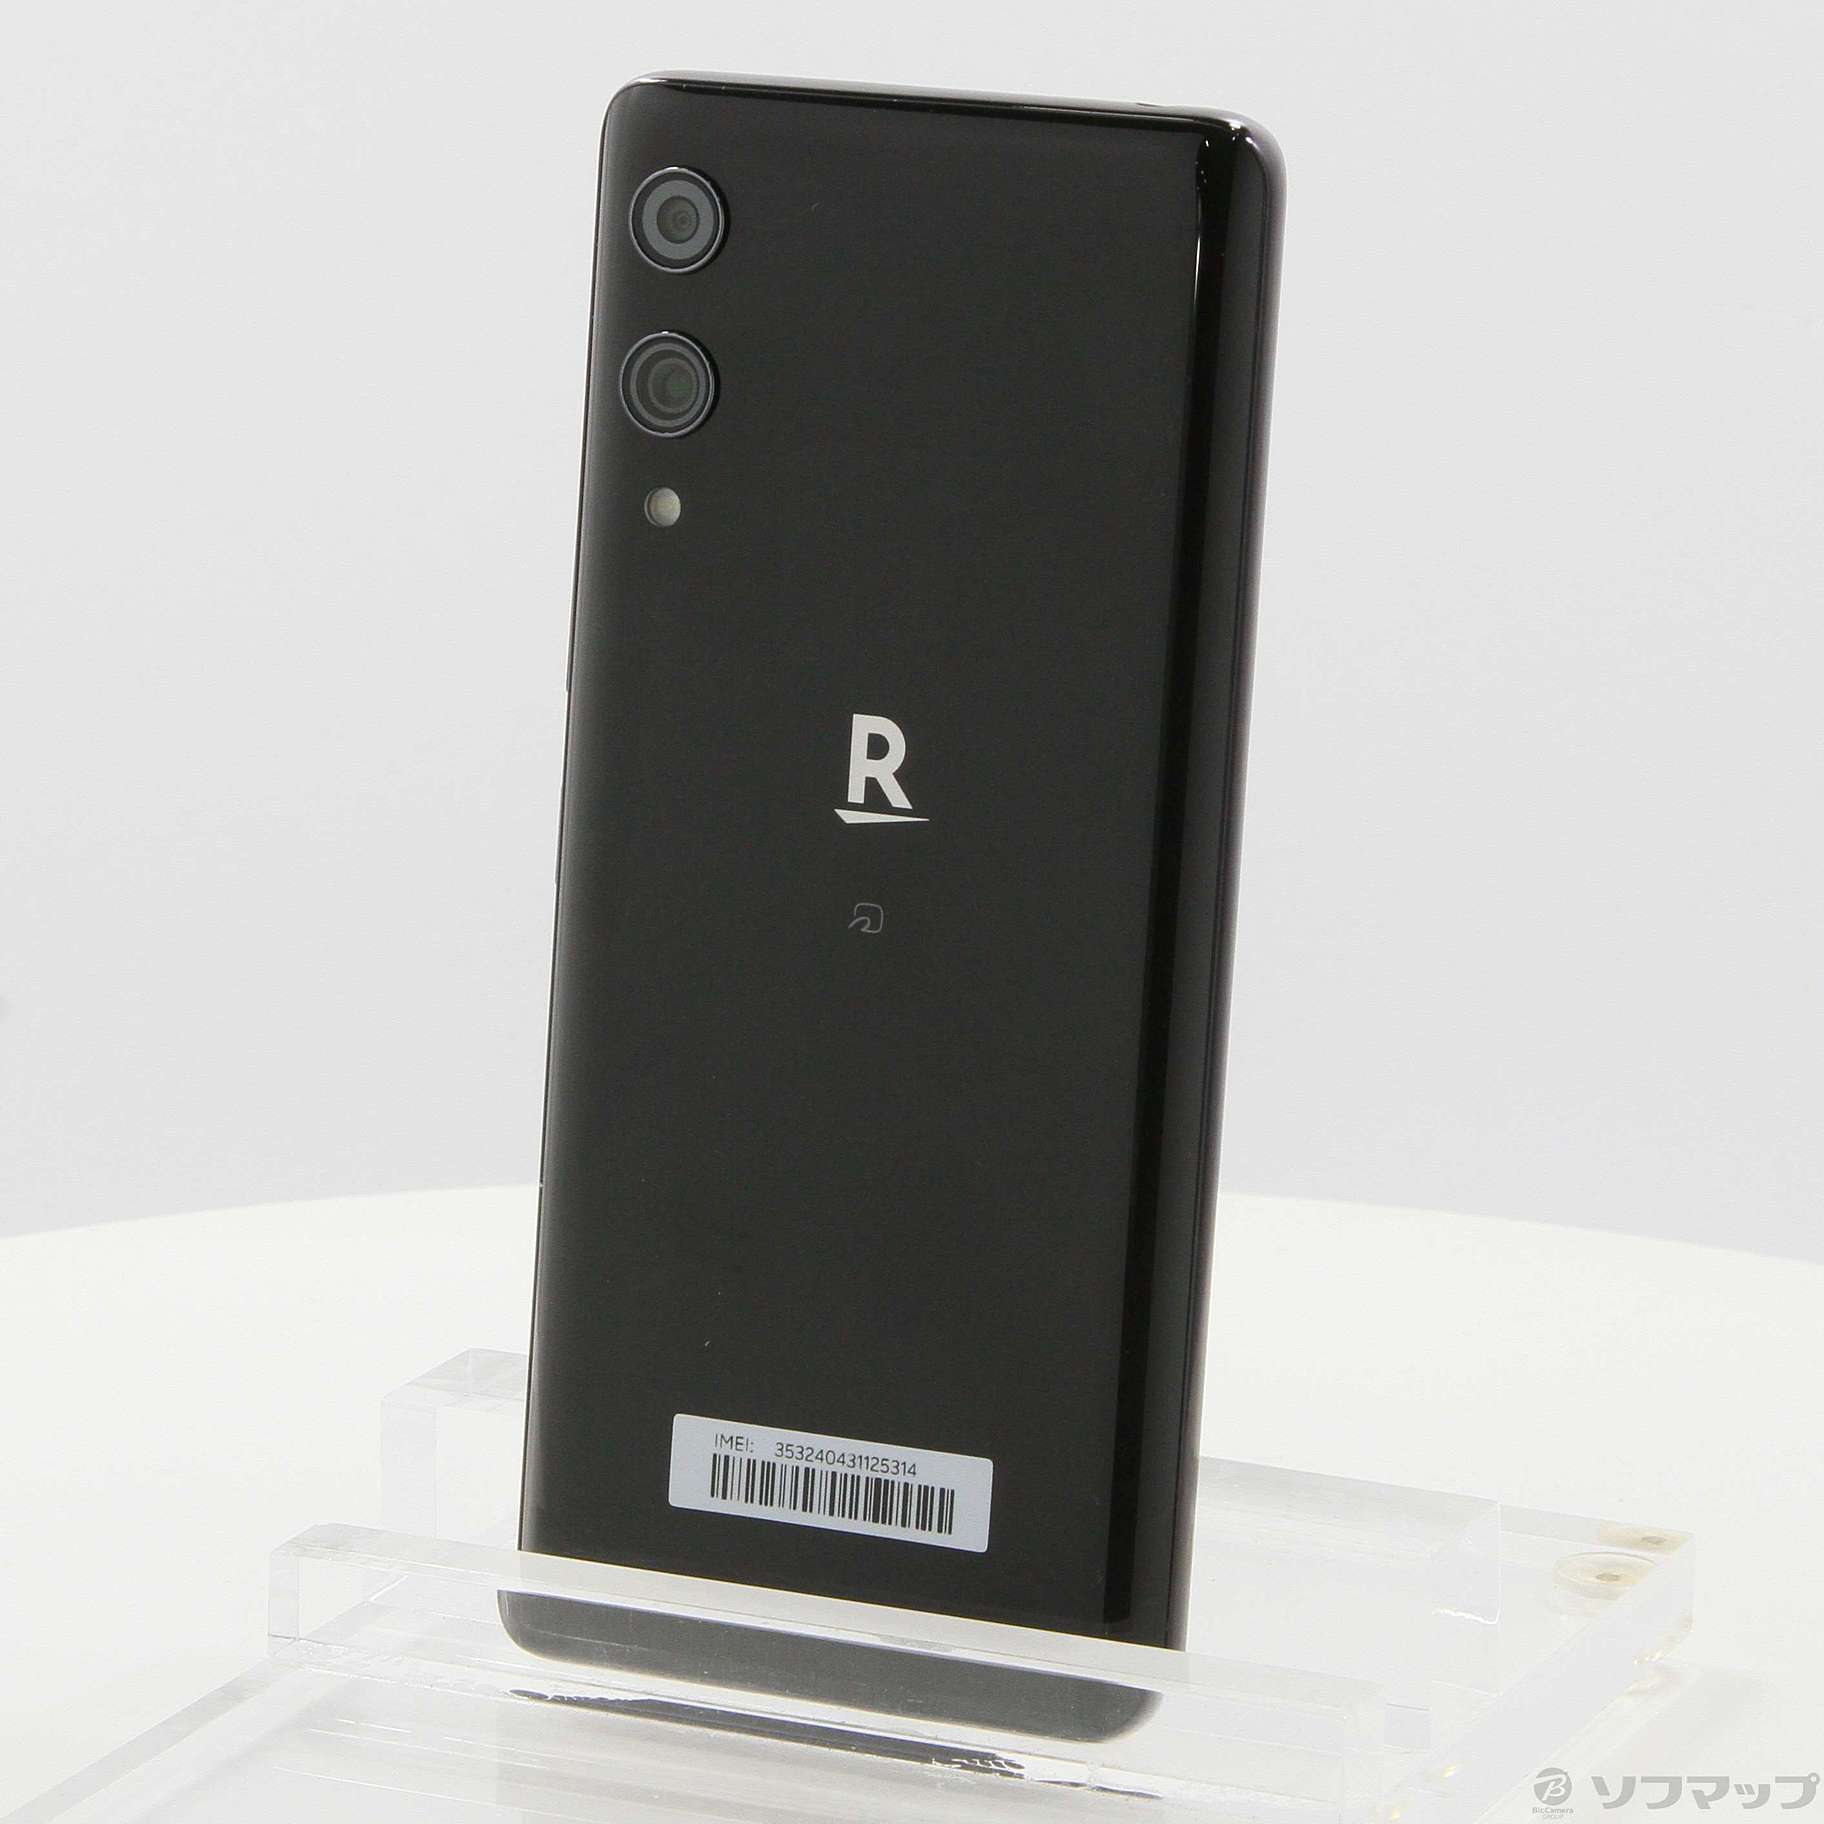 Rakuten Hand 64GB ブラック P710 SIMフリーブラックCPUコア数